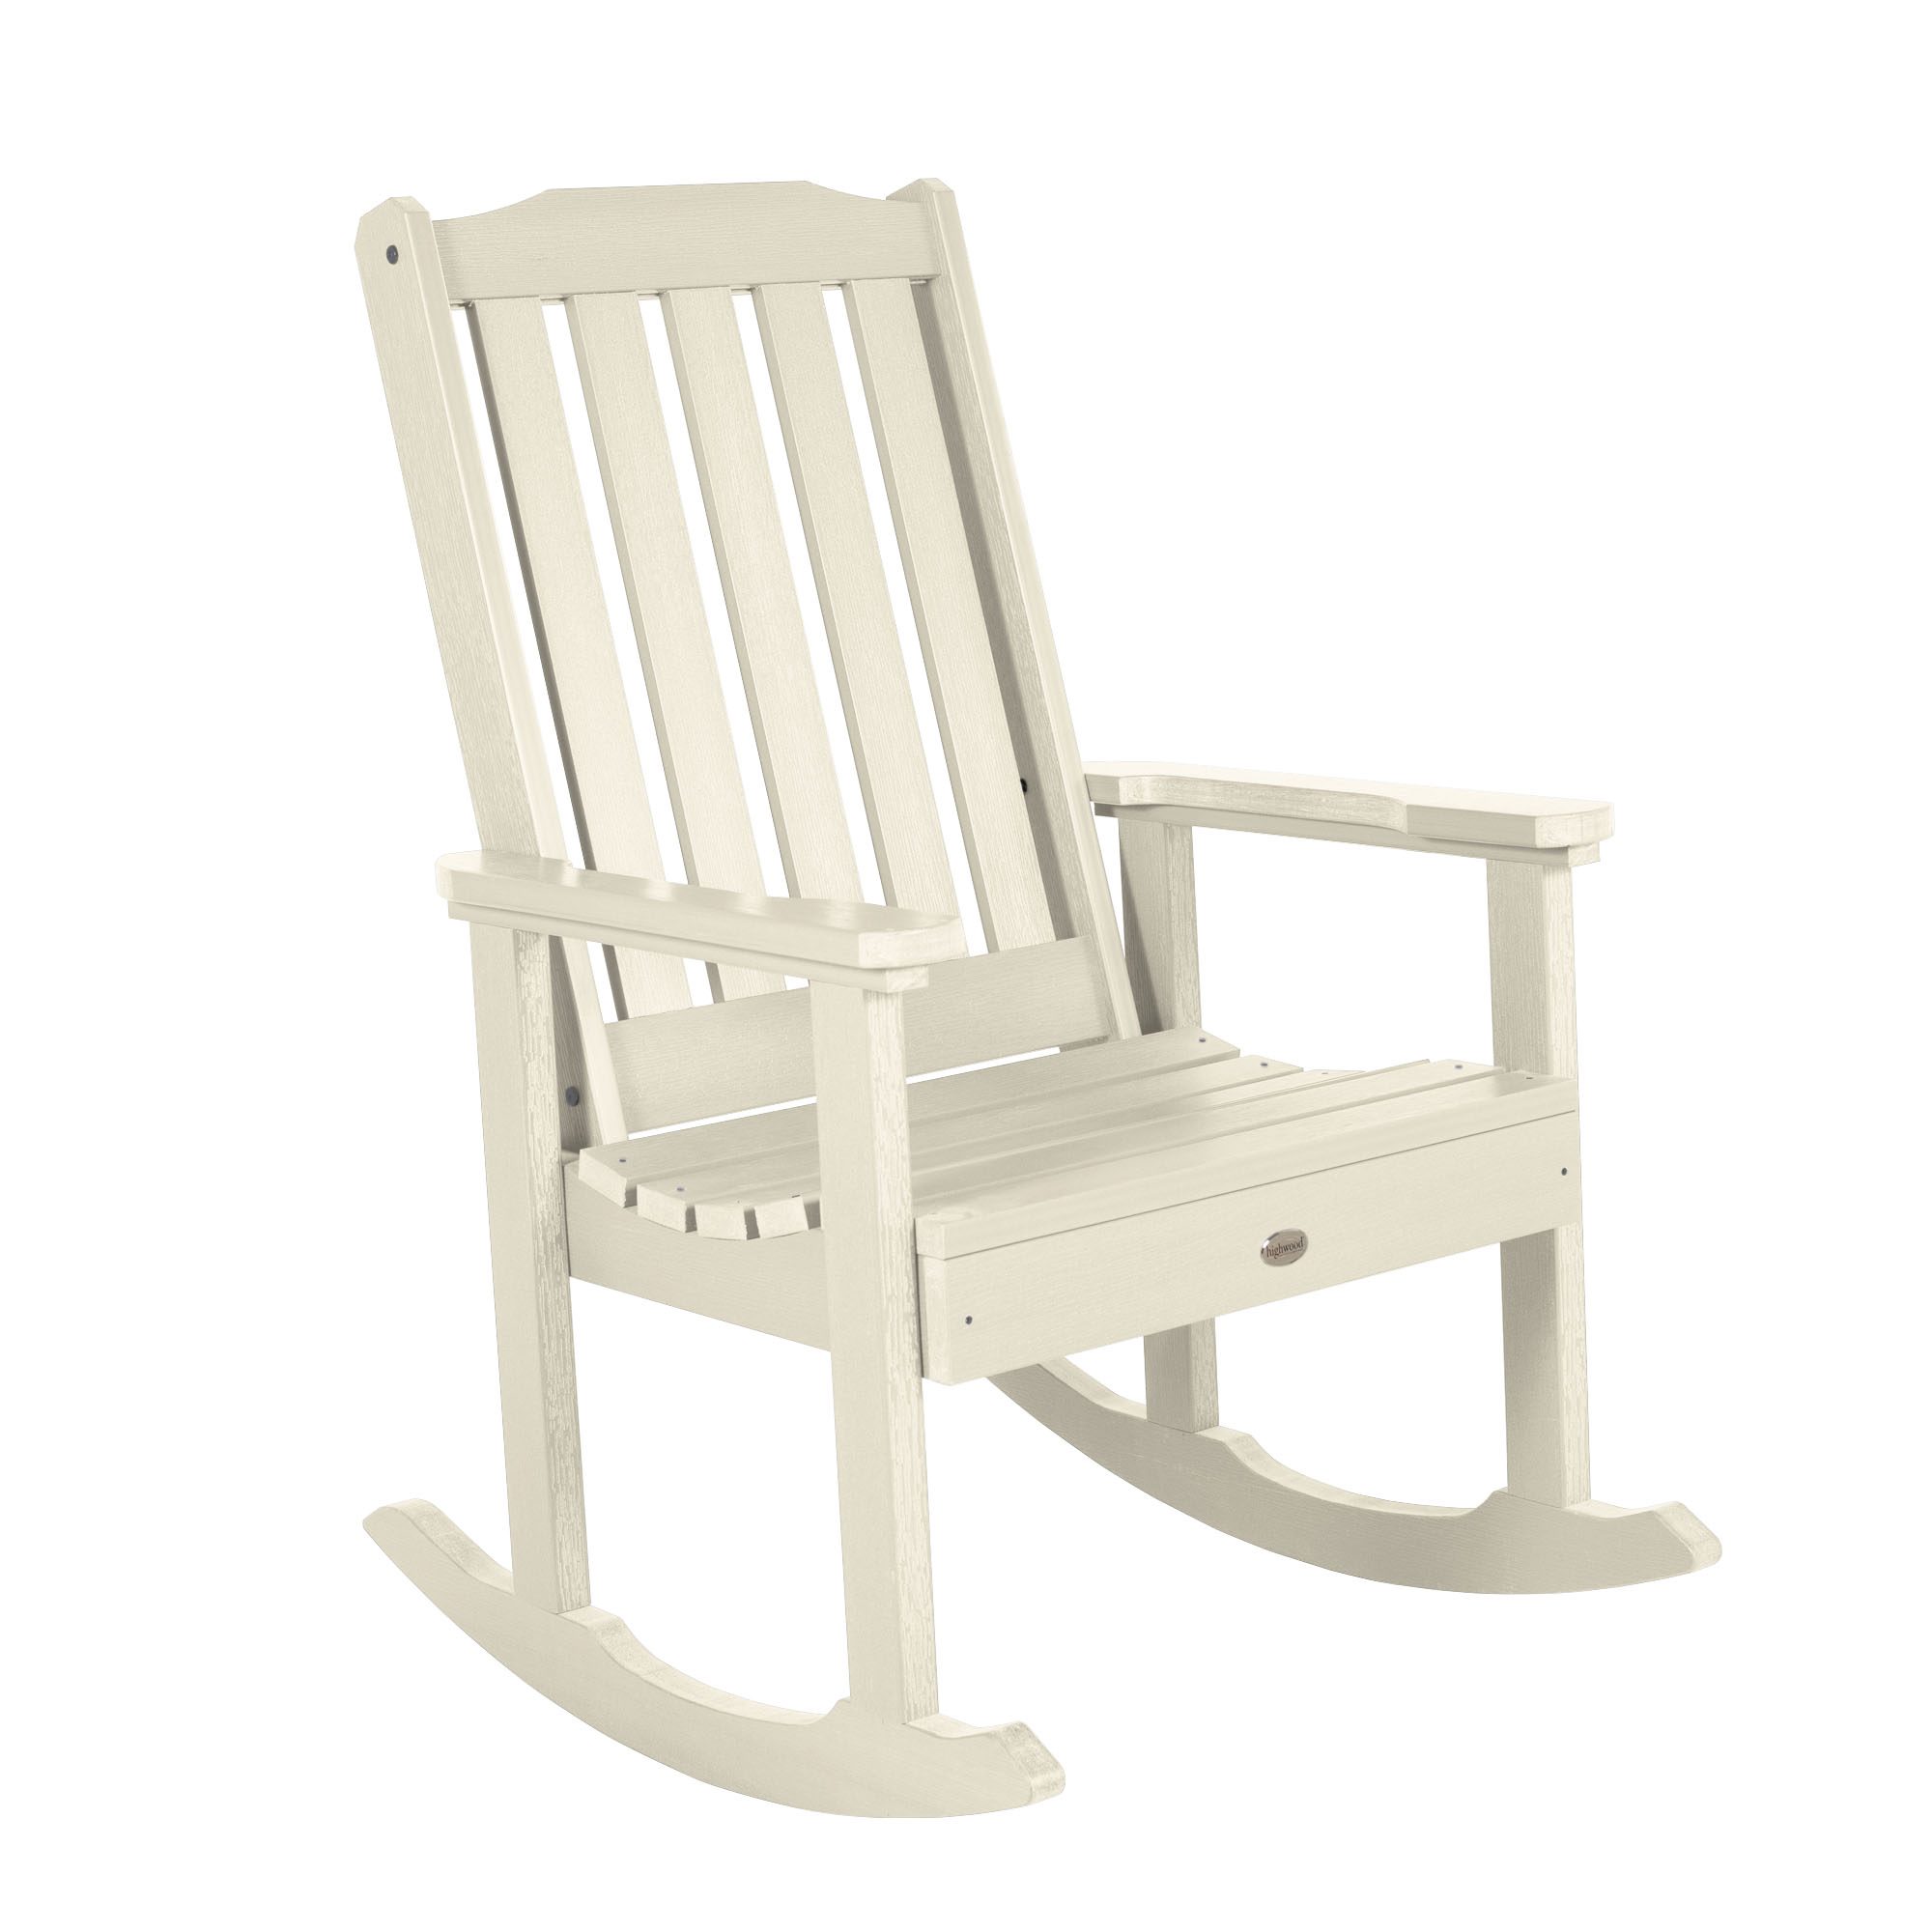 Highwood Lehigh Rocking Chair - image 1 of 4